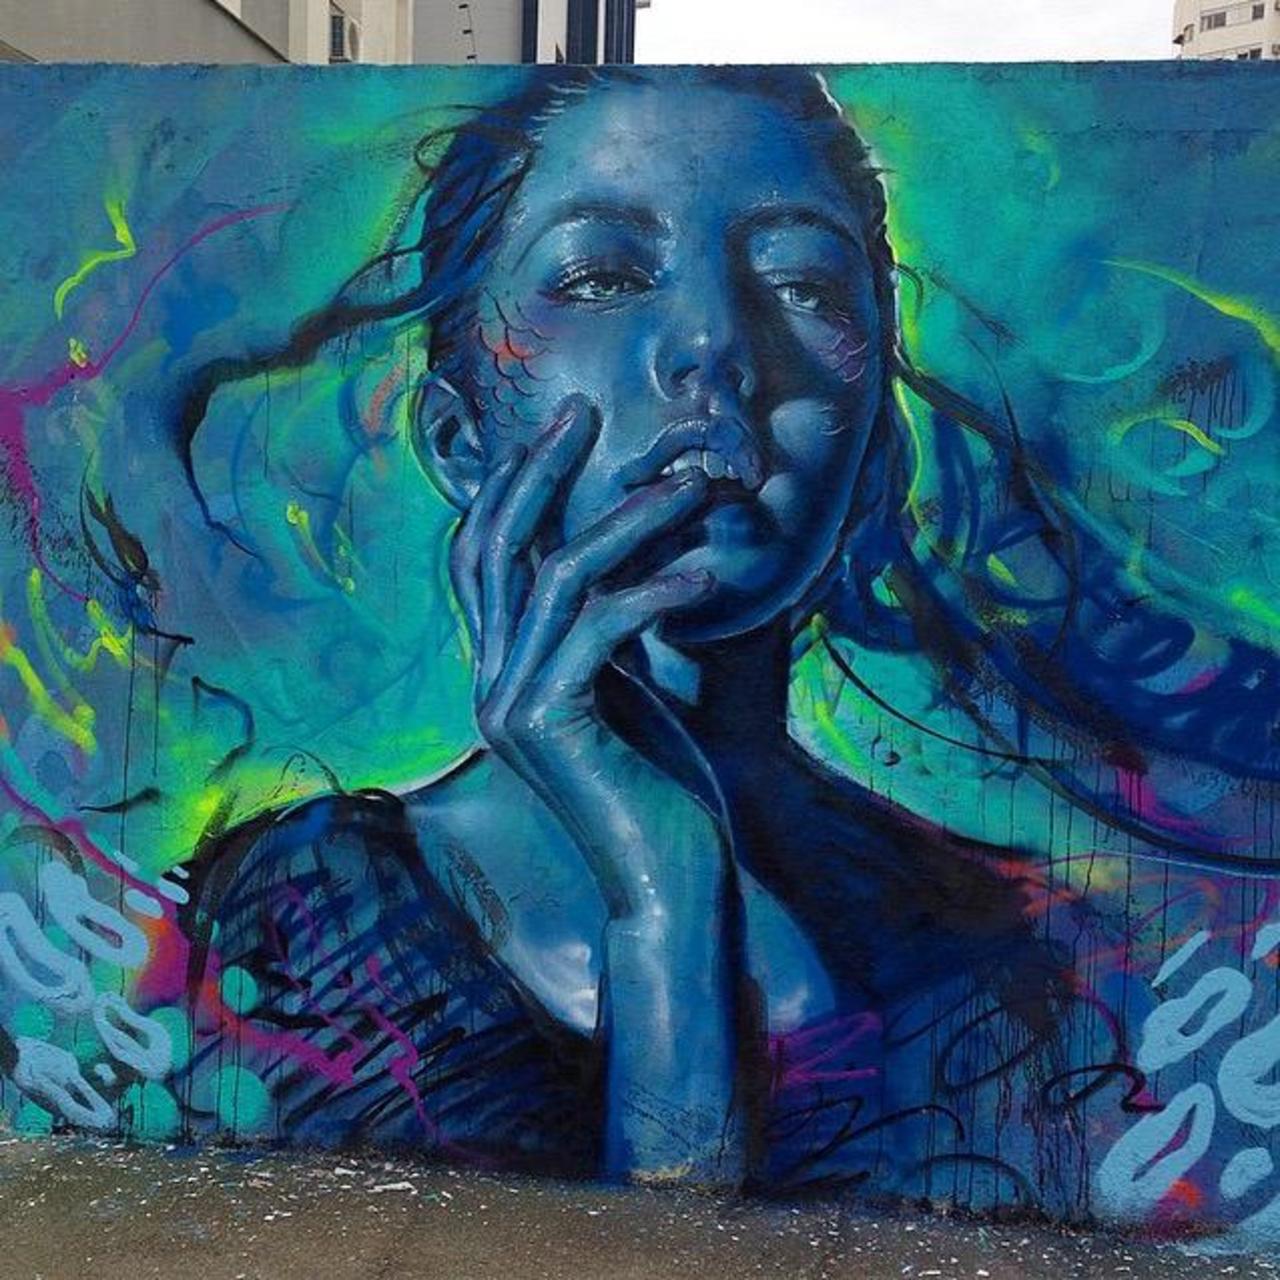 Thiago Valdi new Street Art piece titled 'Day Dreamer' #art #mural #graffiti #streetart http://t.co/3UodbQm48I …… http://twitter.com/GoogleStreetArt/status/652604458048876544/photo/1/large?utm_source=fb&utm_medium=fb&utm_campaign=charlesjackso14&utm_content=652728473547612160